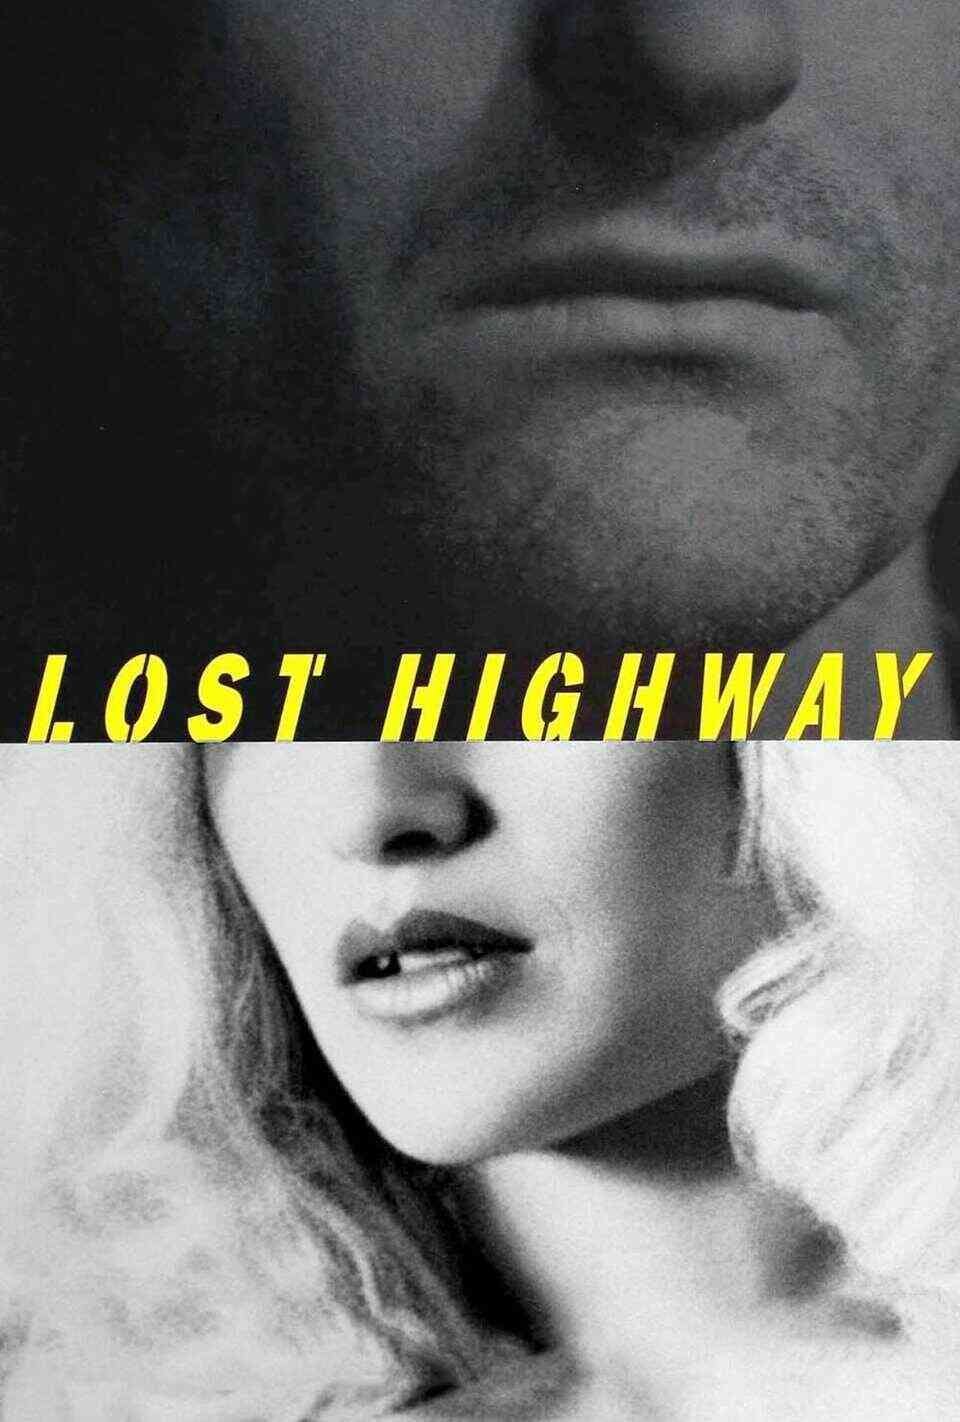 Read Lost Highway screenplay.